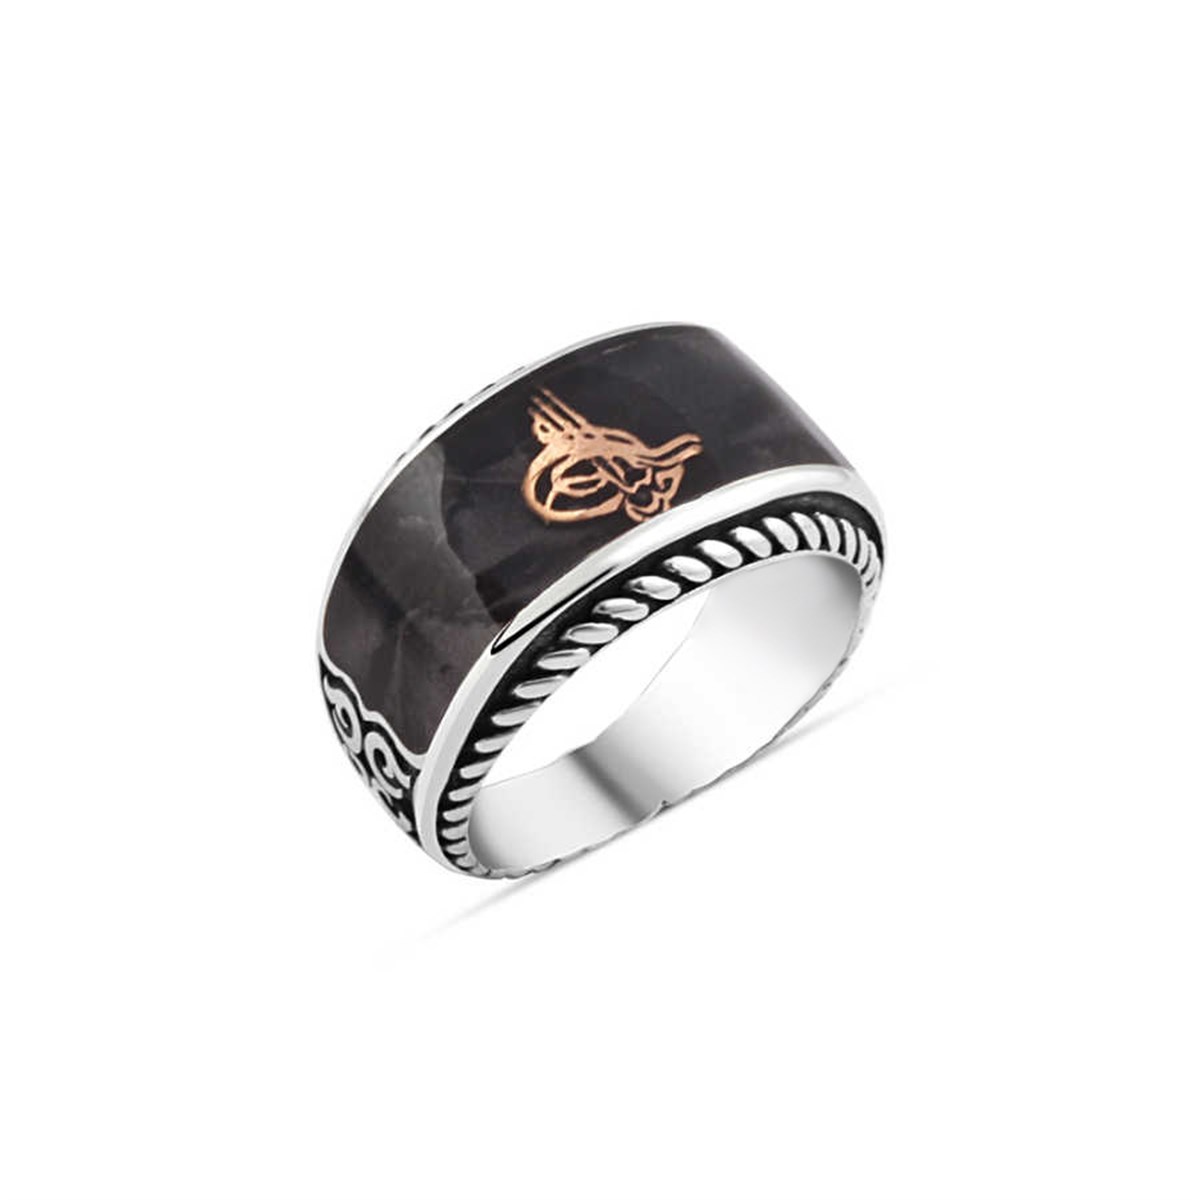 Enamel Tugra Sterling Silver Men's Ring